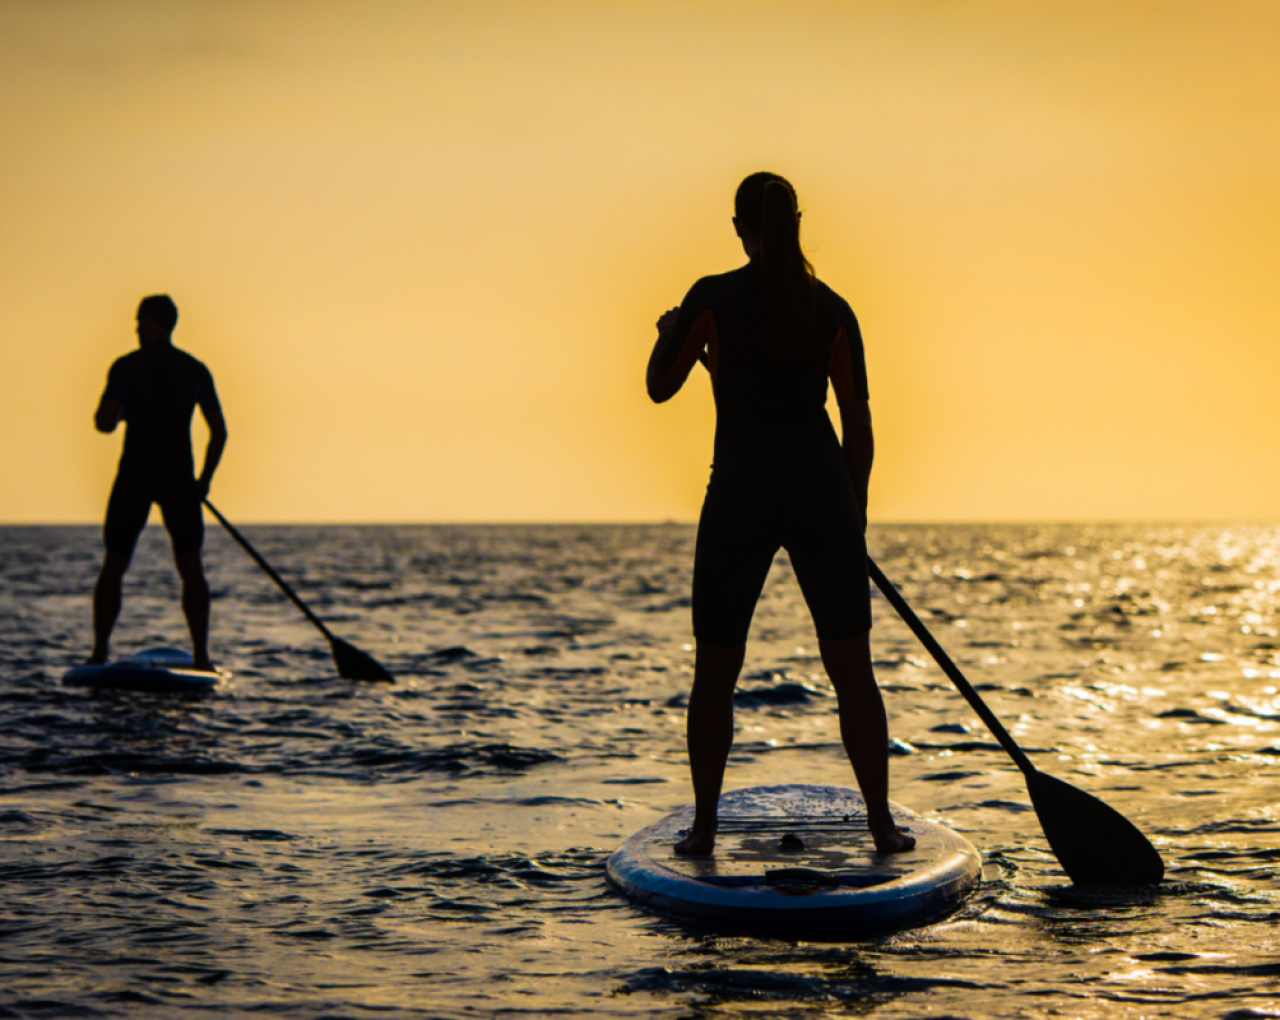 Paddle boarders sea sunset